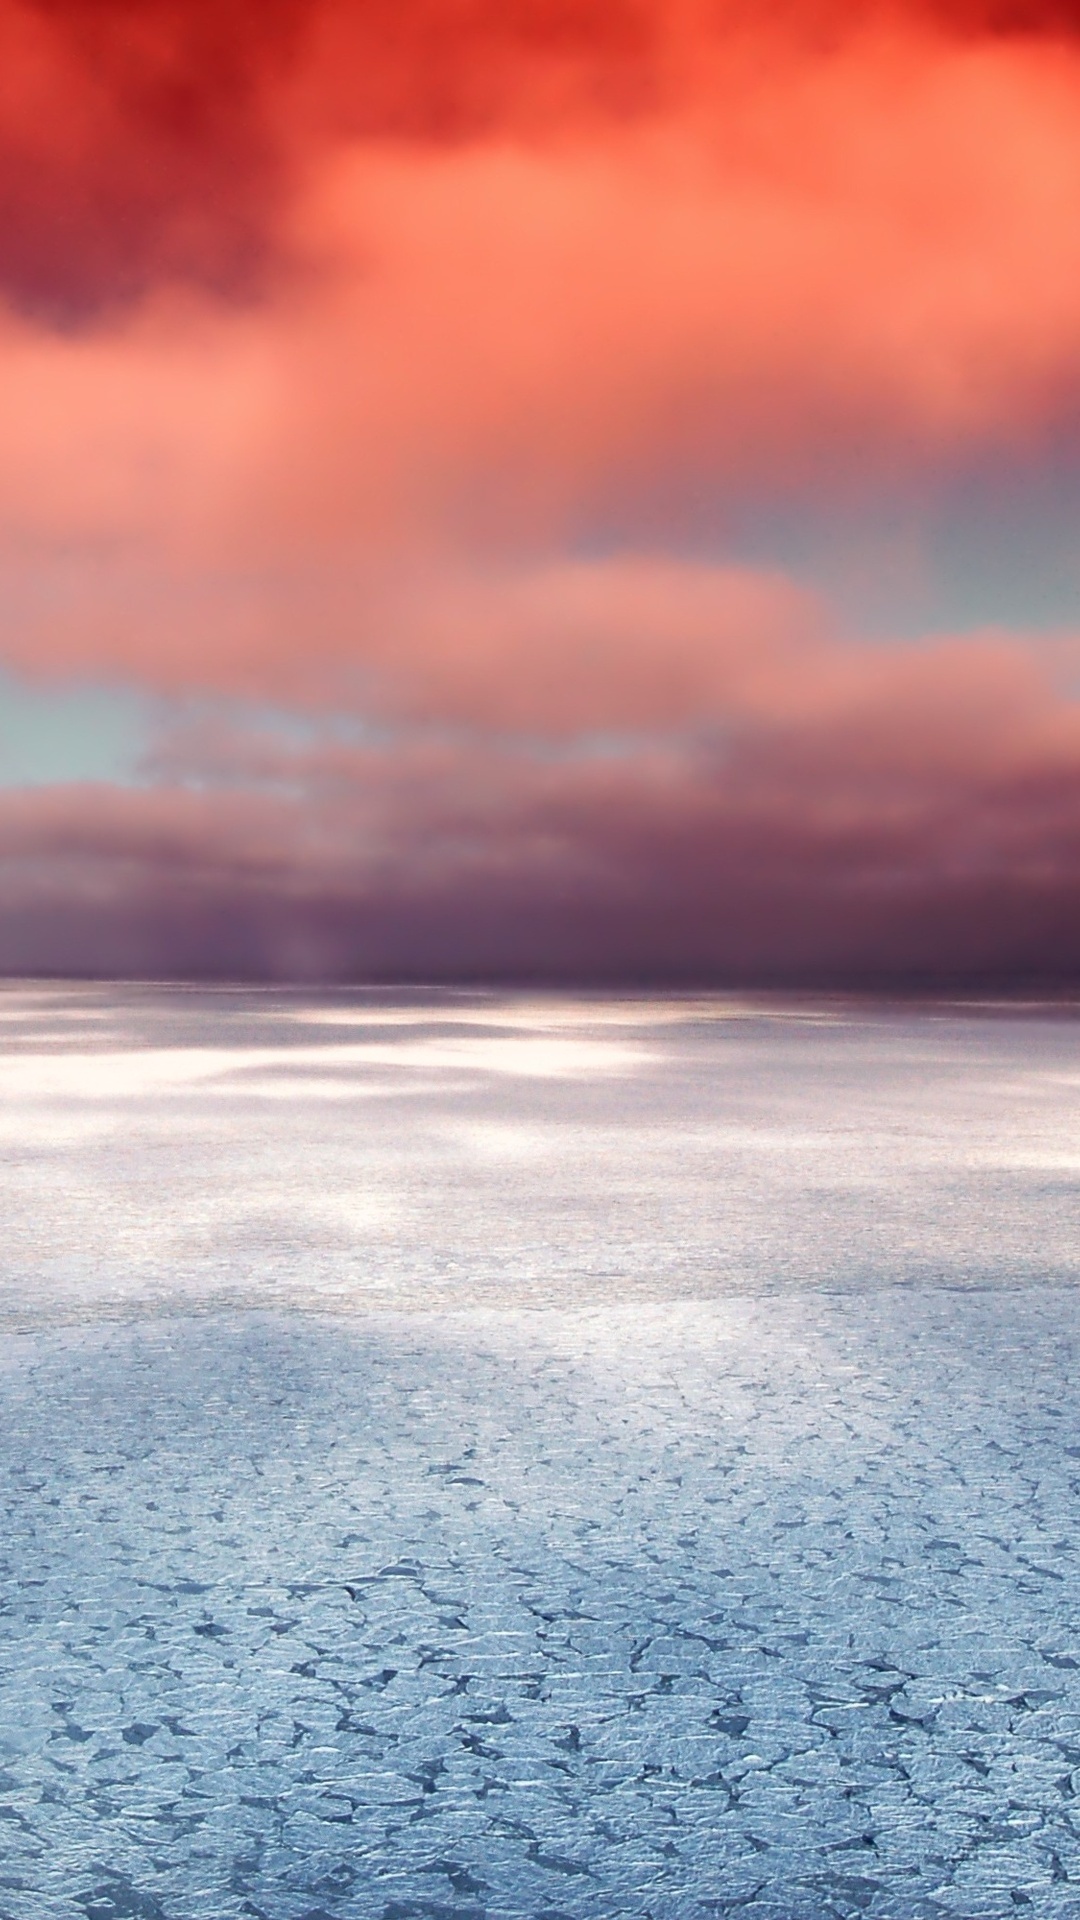 Hudson Bay Canada, Sea and ocean, HD wallpapers, Natural scenery, 1080x1920 Full HD Phone